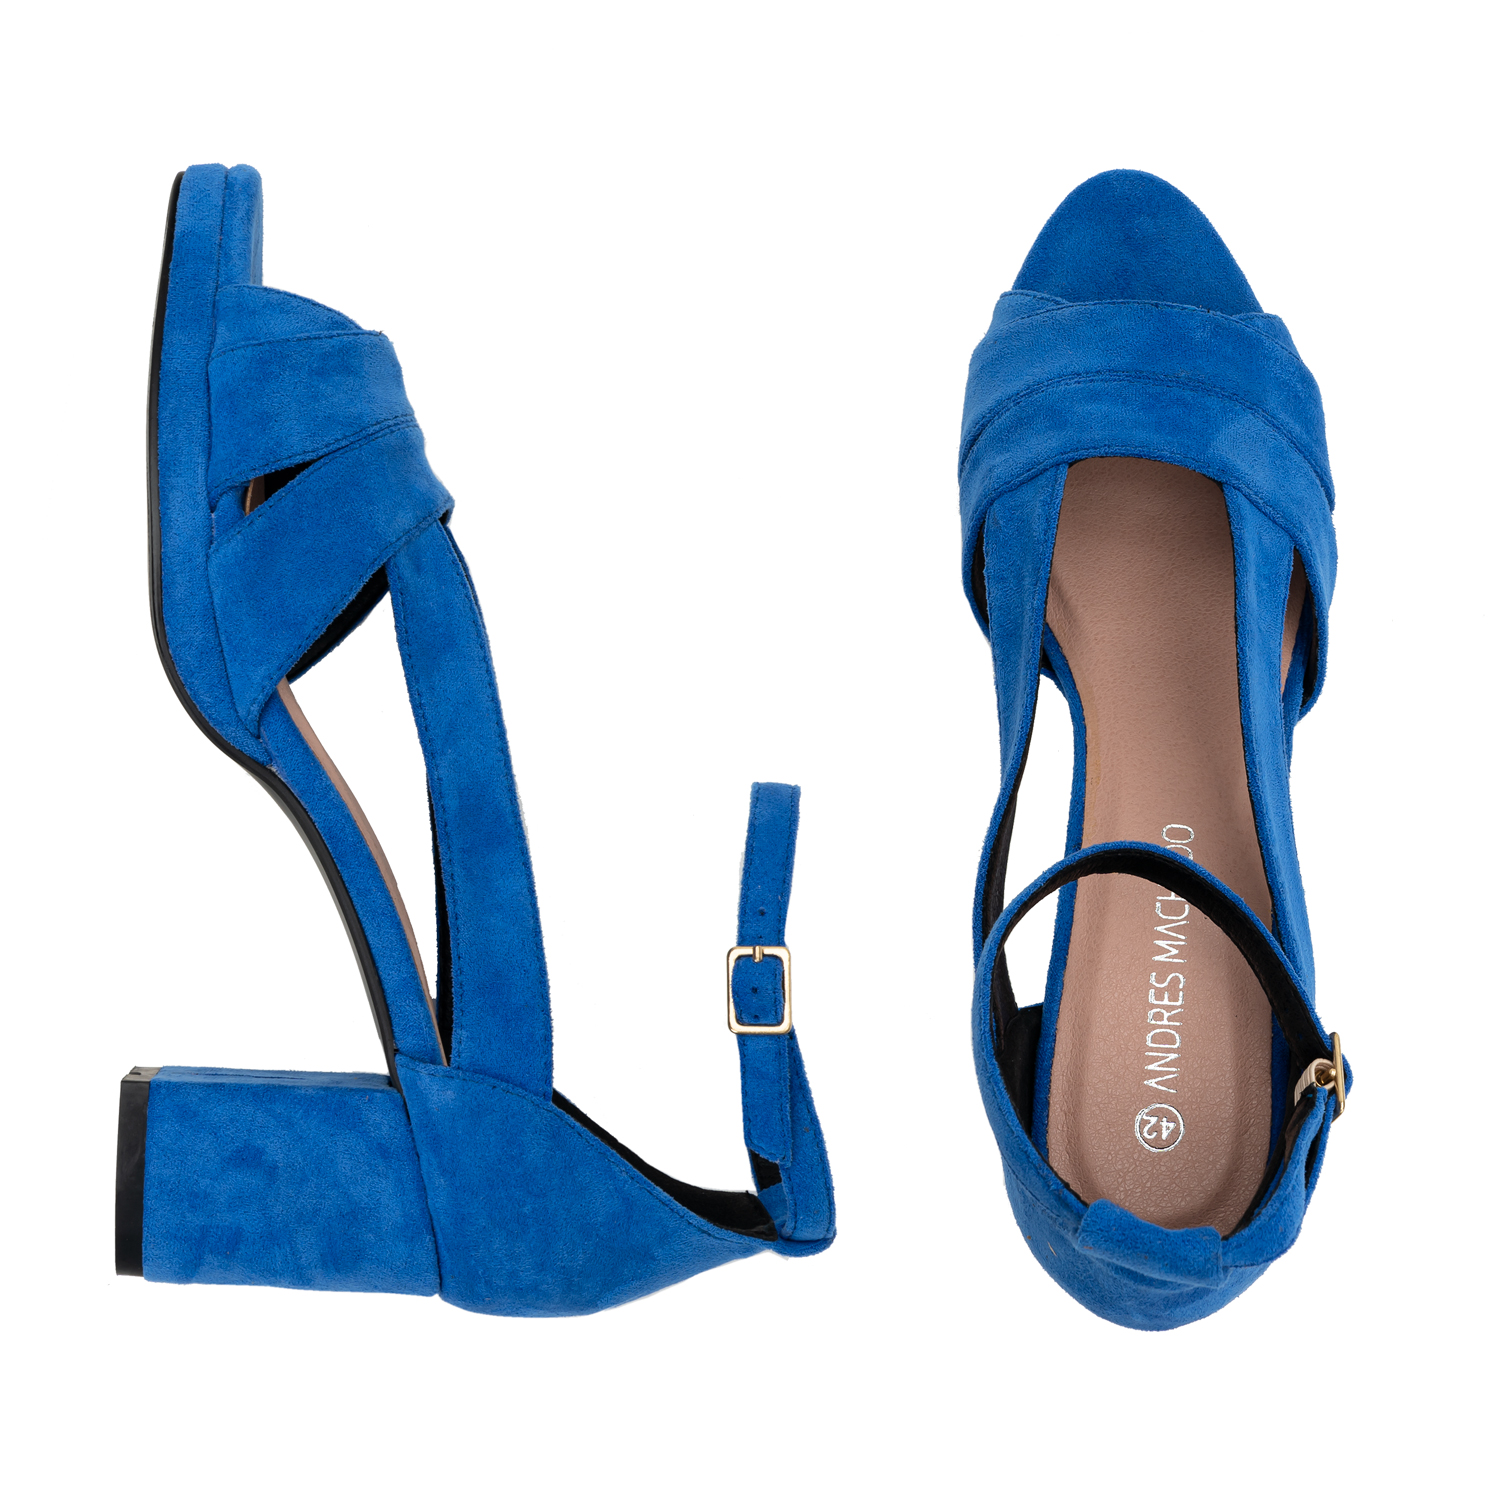 Sandaletten aus blauem Velourlederimitat 